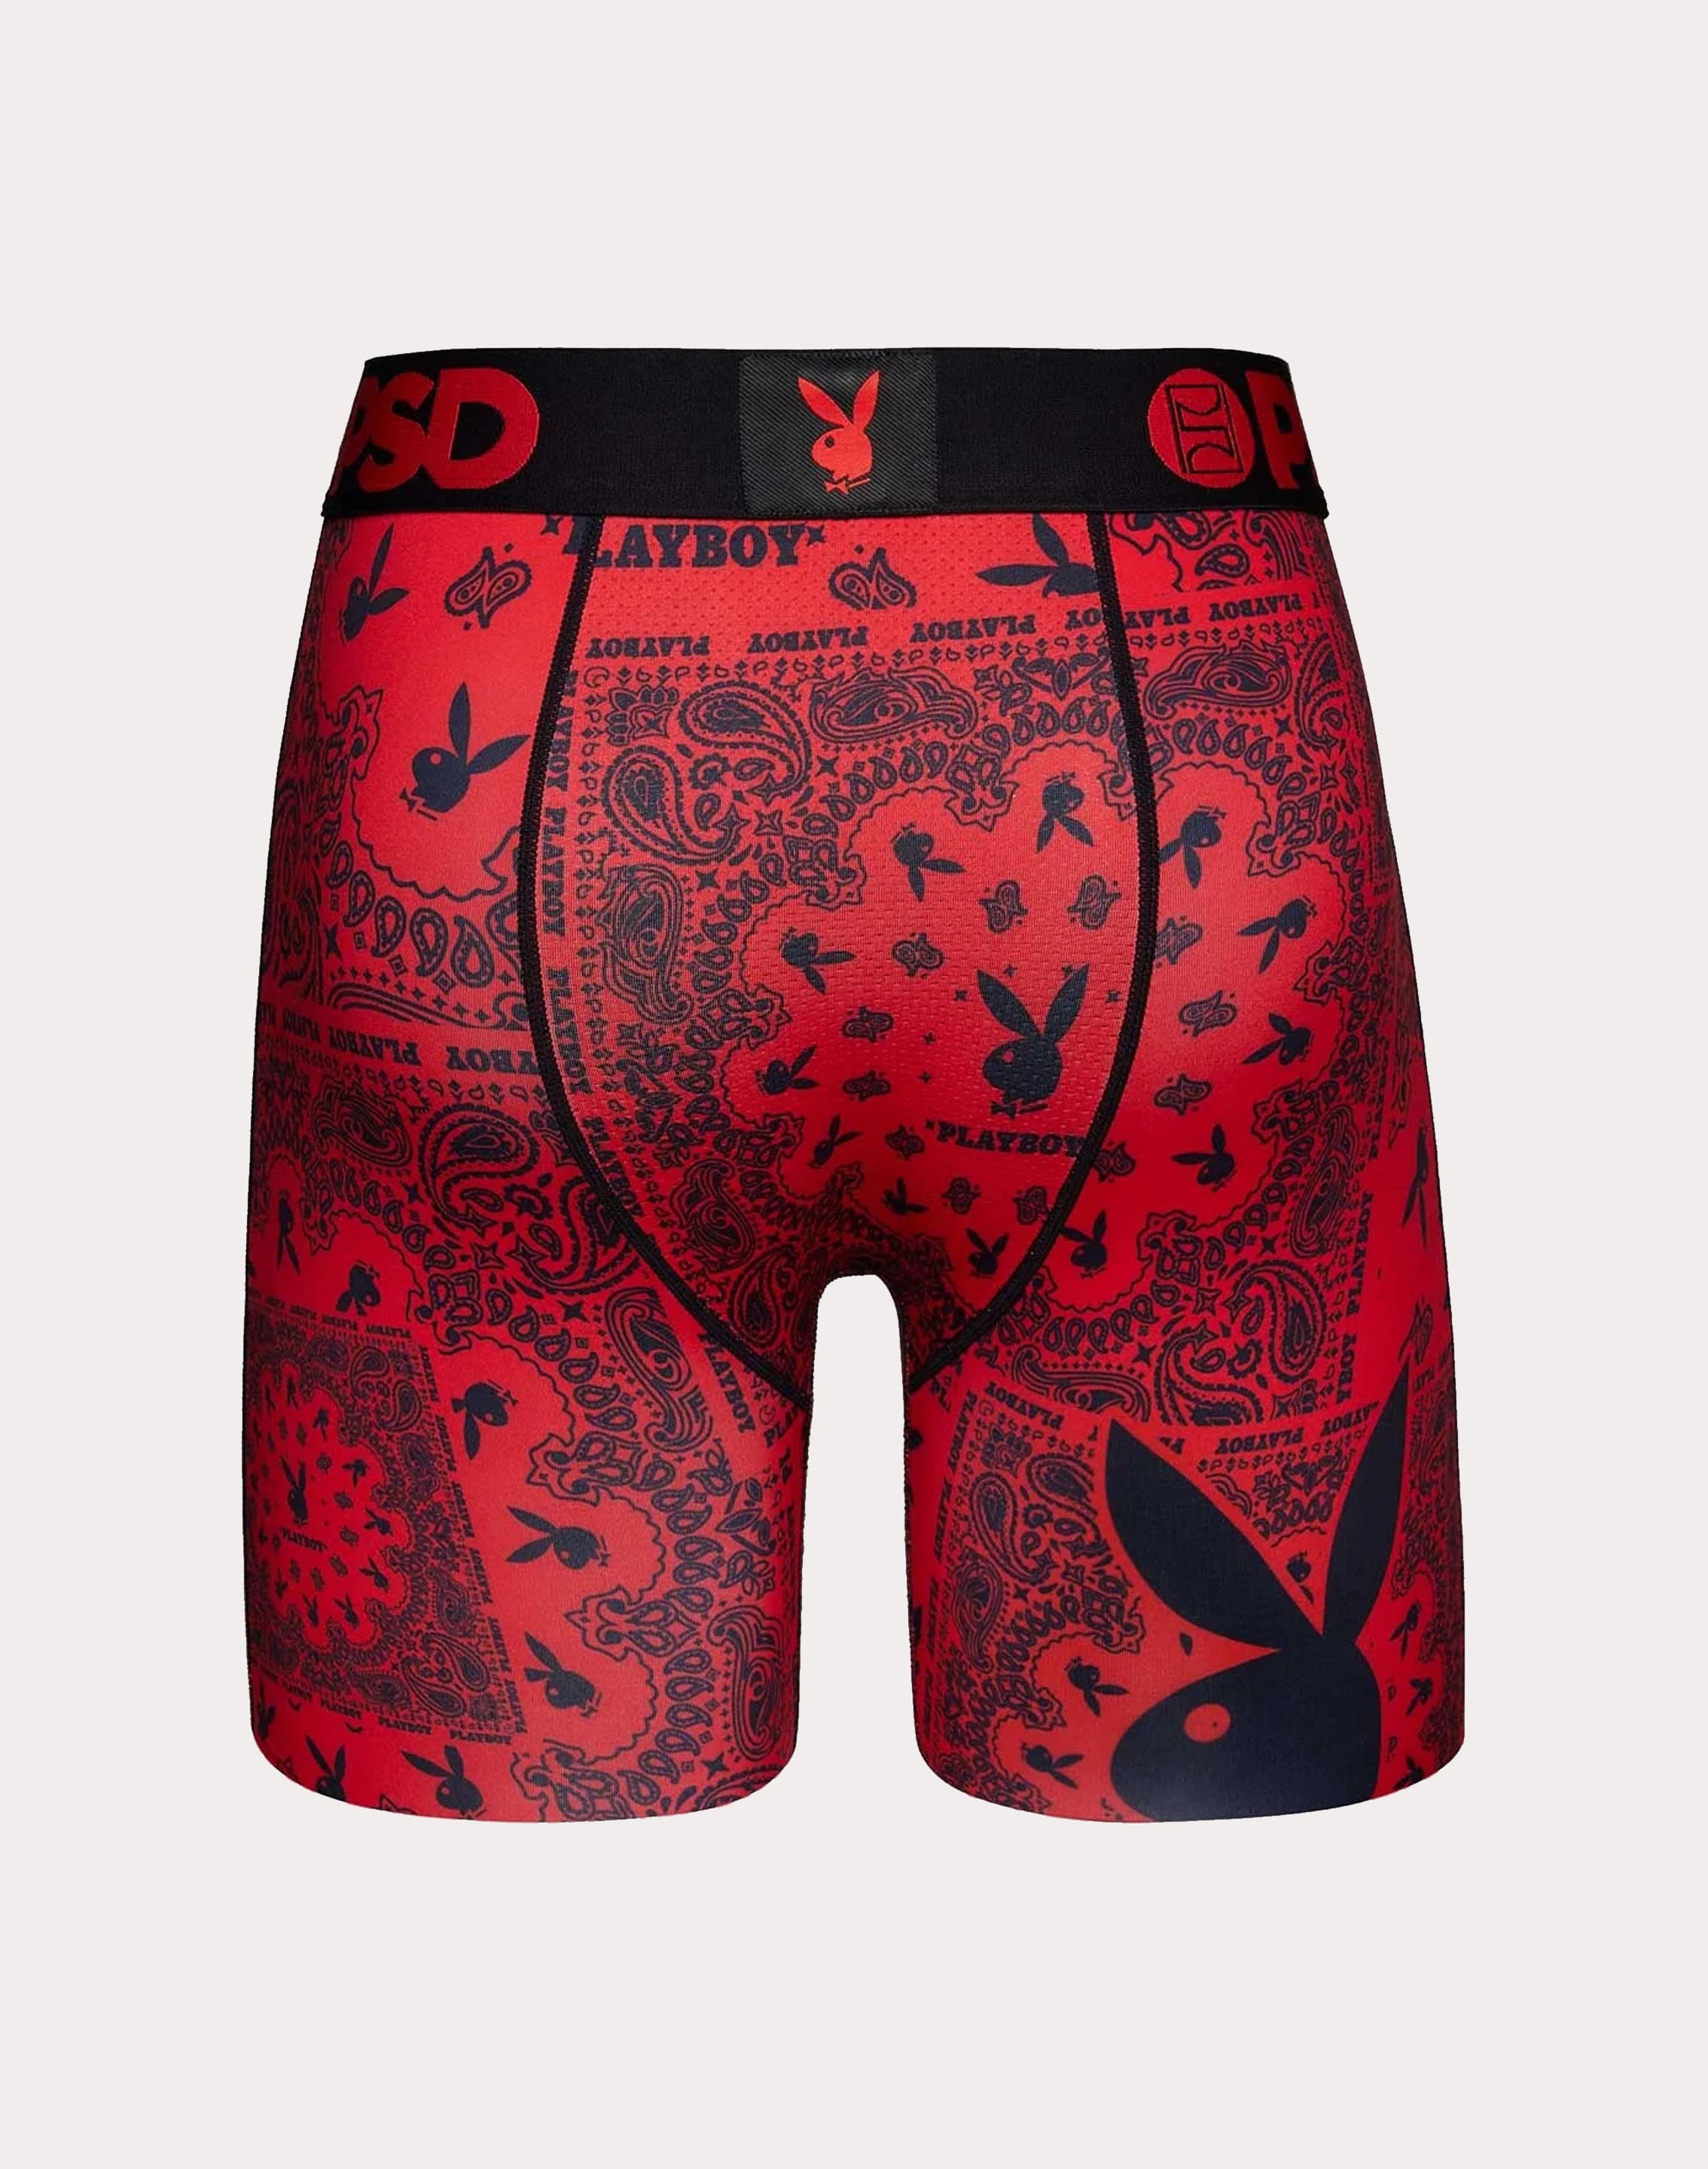 PSD Underwear Women's Playboy Red Chinese Boyshort Panty- Size